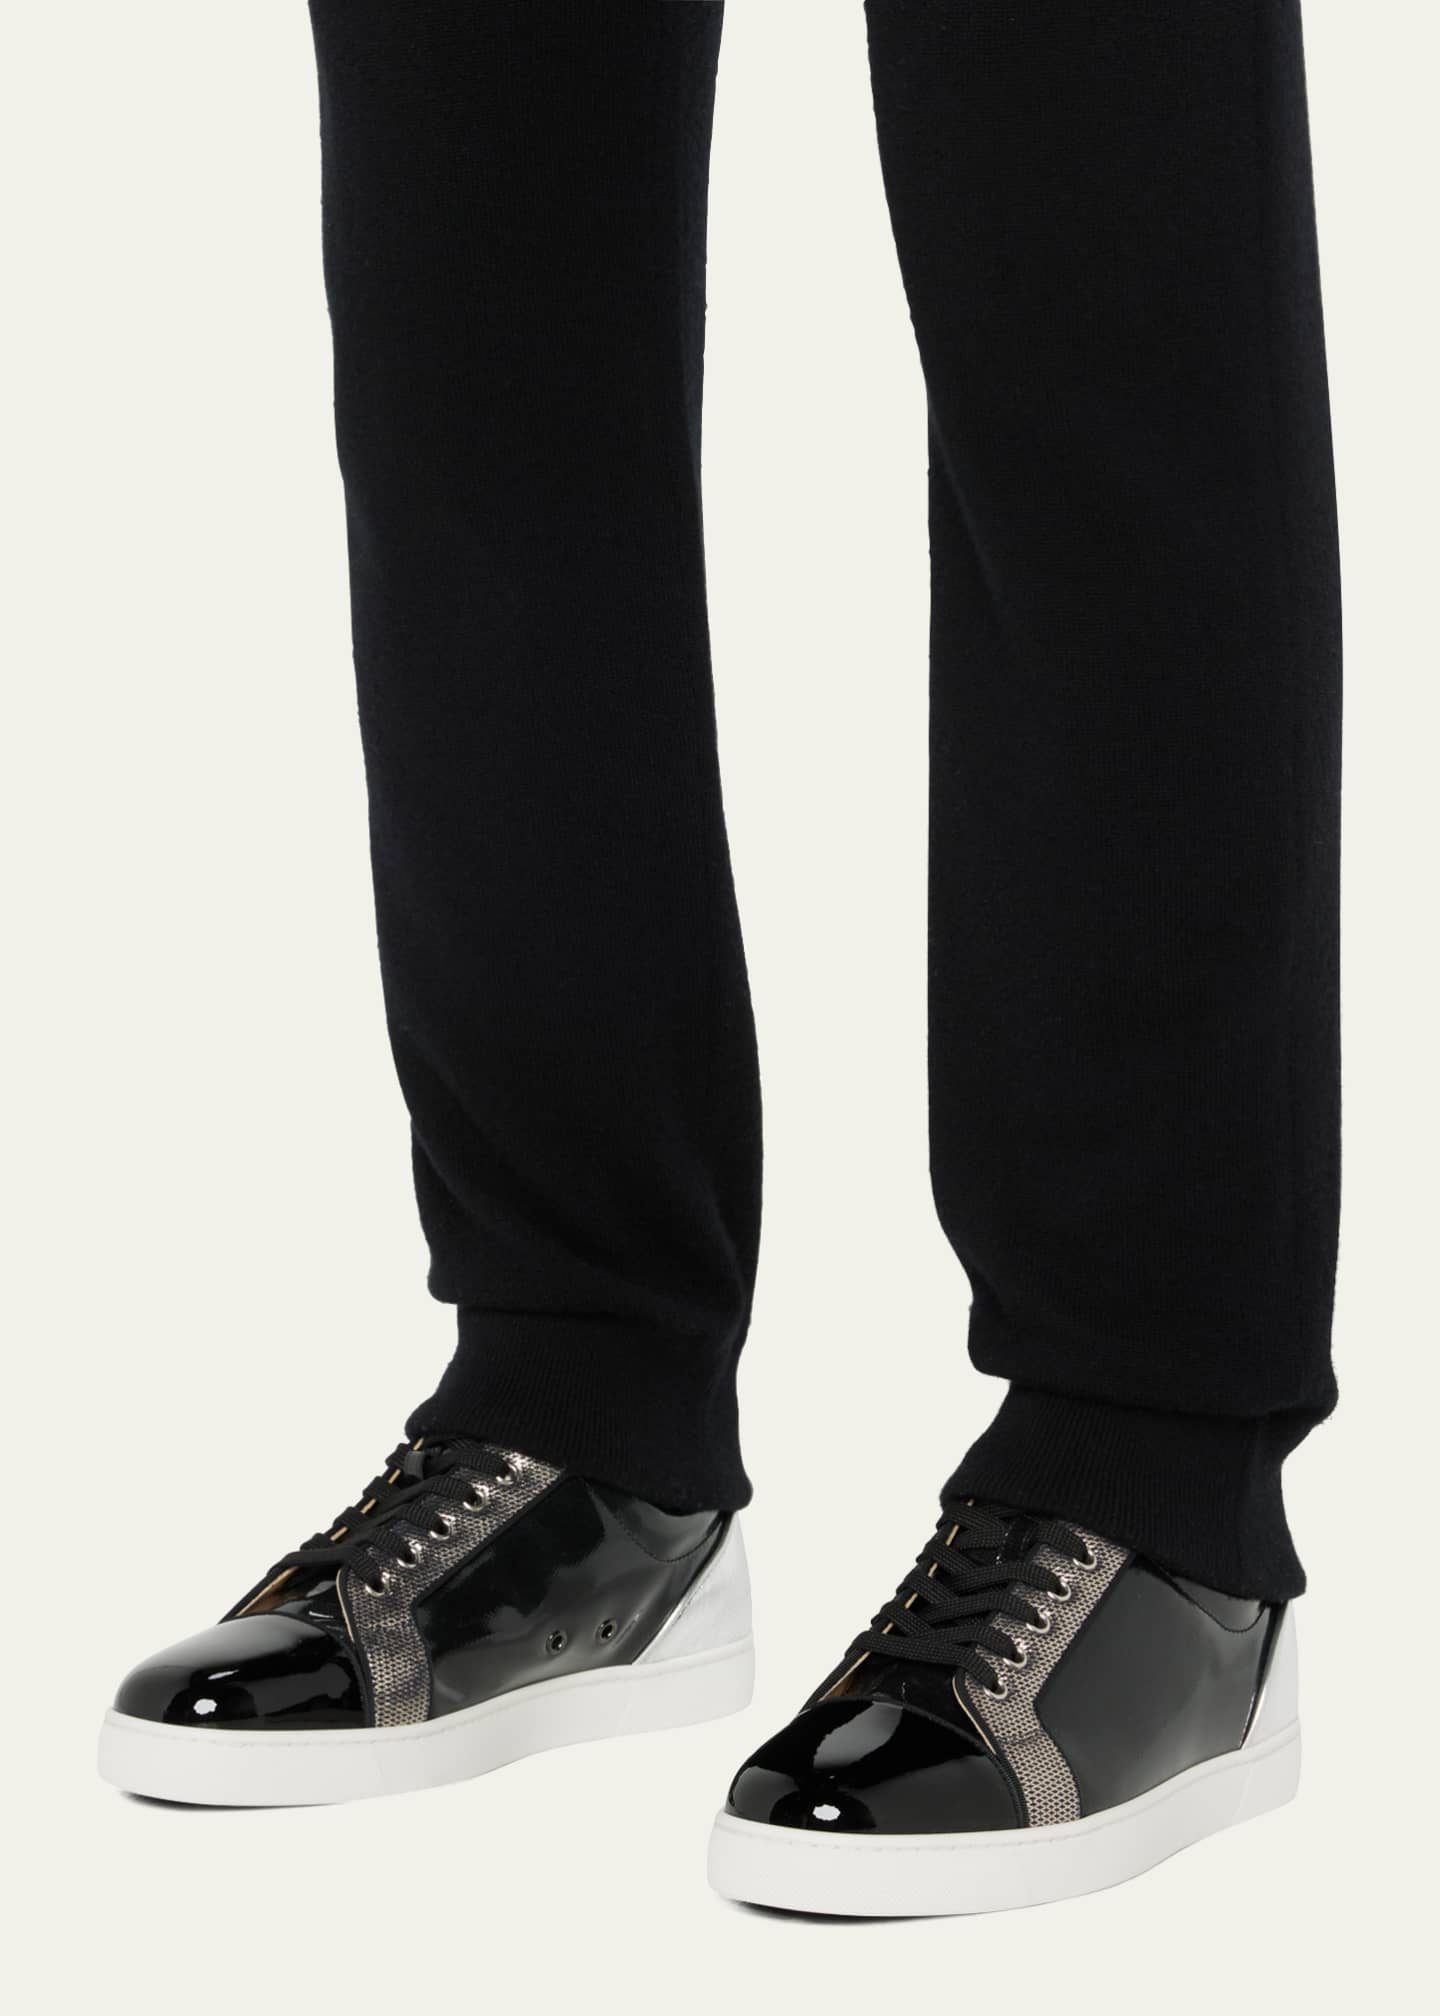 Christian Louboutin Men's Fun Louis Patent Leather Low-top Sneakers